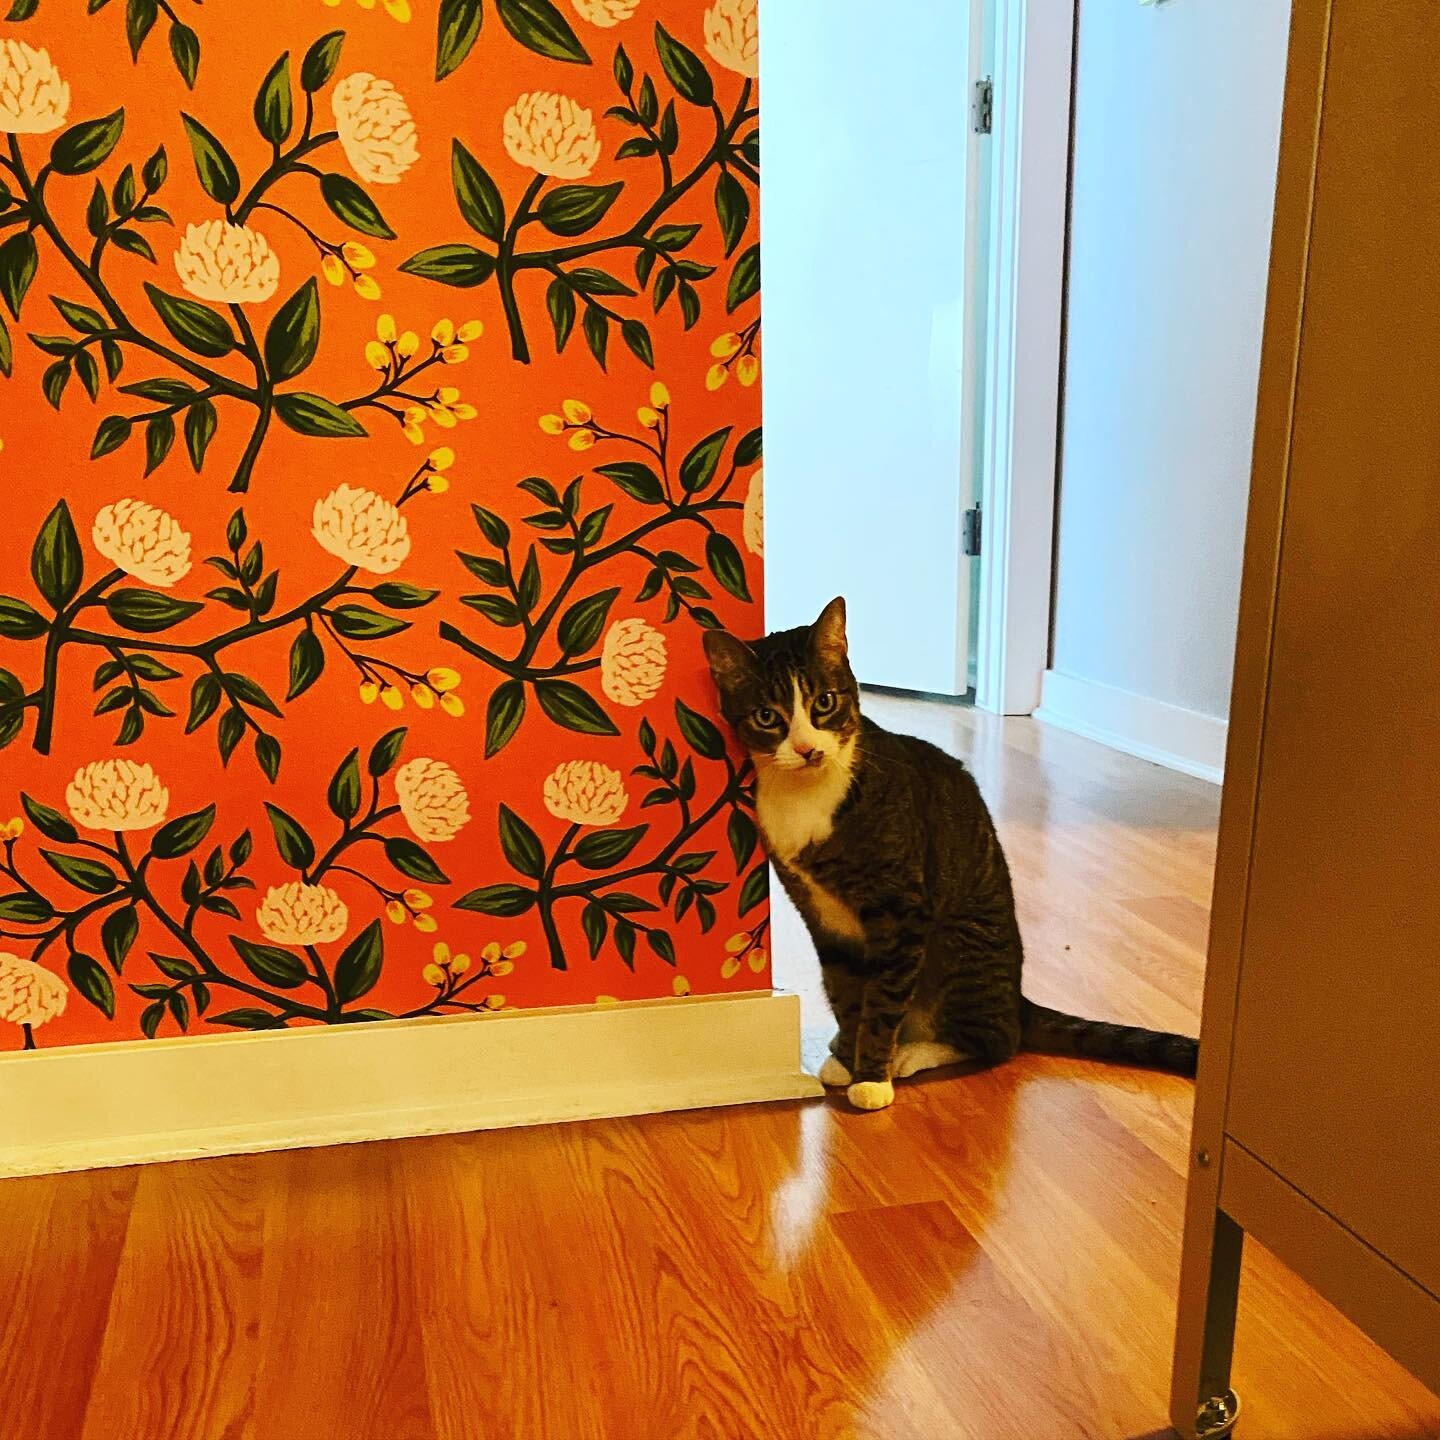 Looks like kitty approves the pretty wallpaper. 

#prettykitty #iapprove #austincatsitters #gobold #catdesigner #prettyandbright #thursday #tabbycat #catsofinstagram #catsofaustin #atx #allthecats